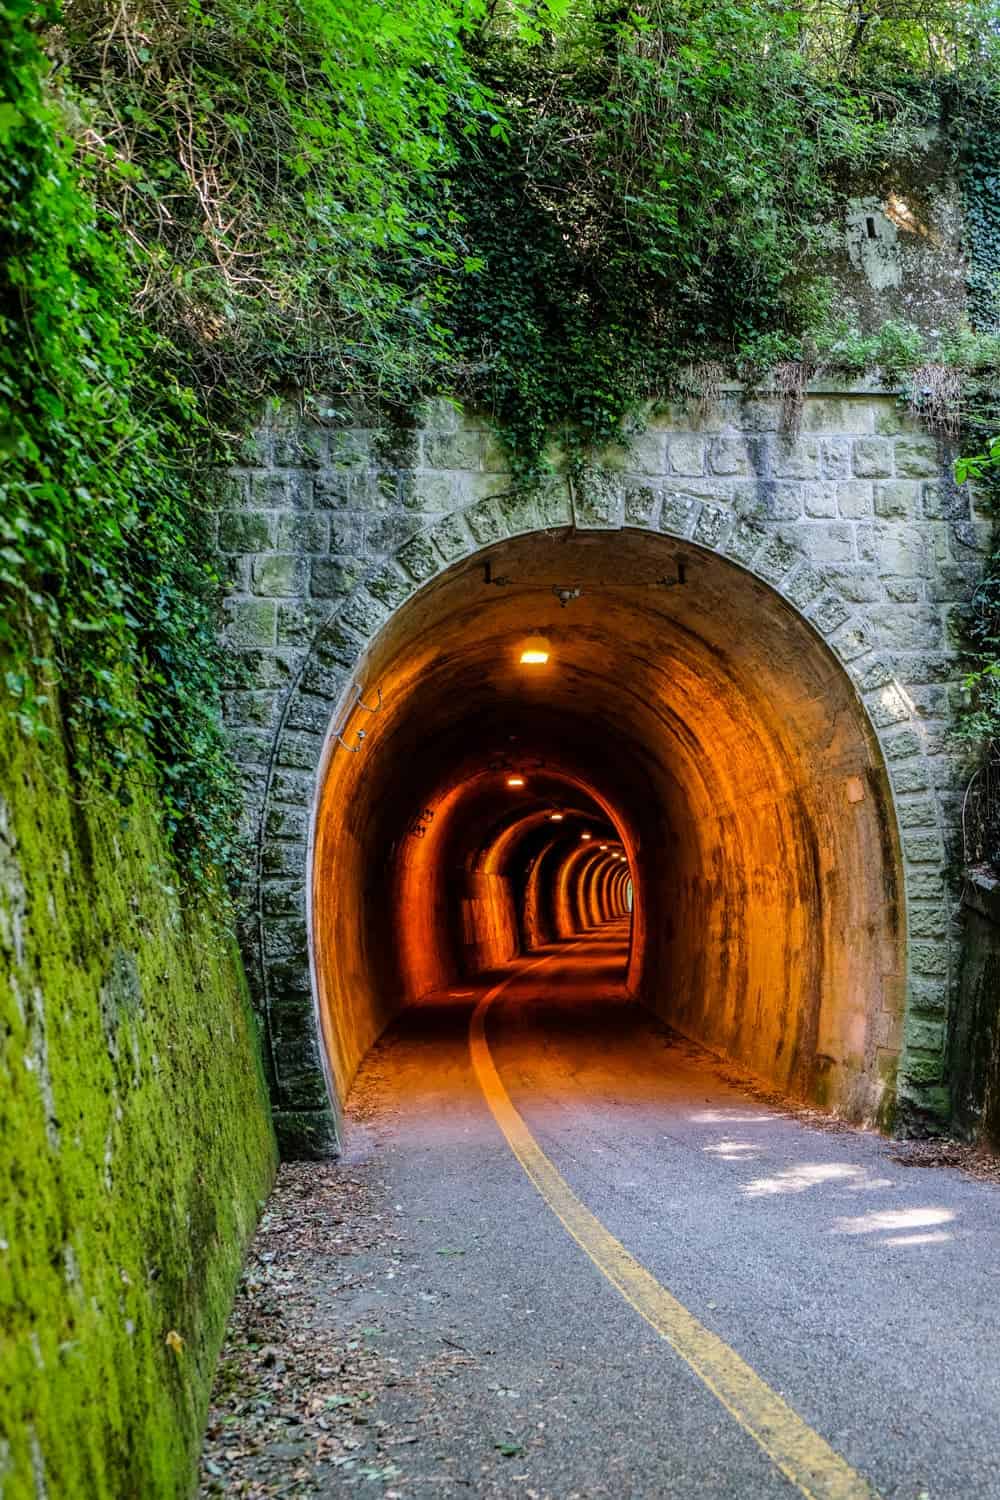 Visiting the old railway tunnels of San Marino on a biking trip